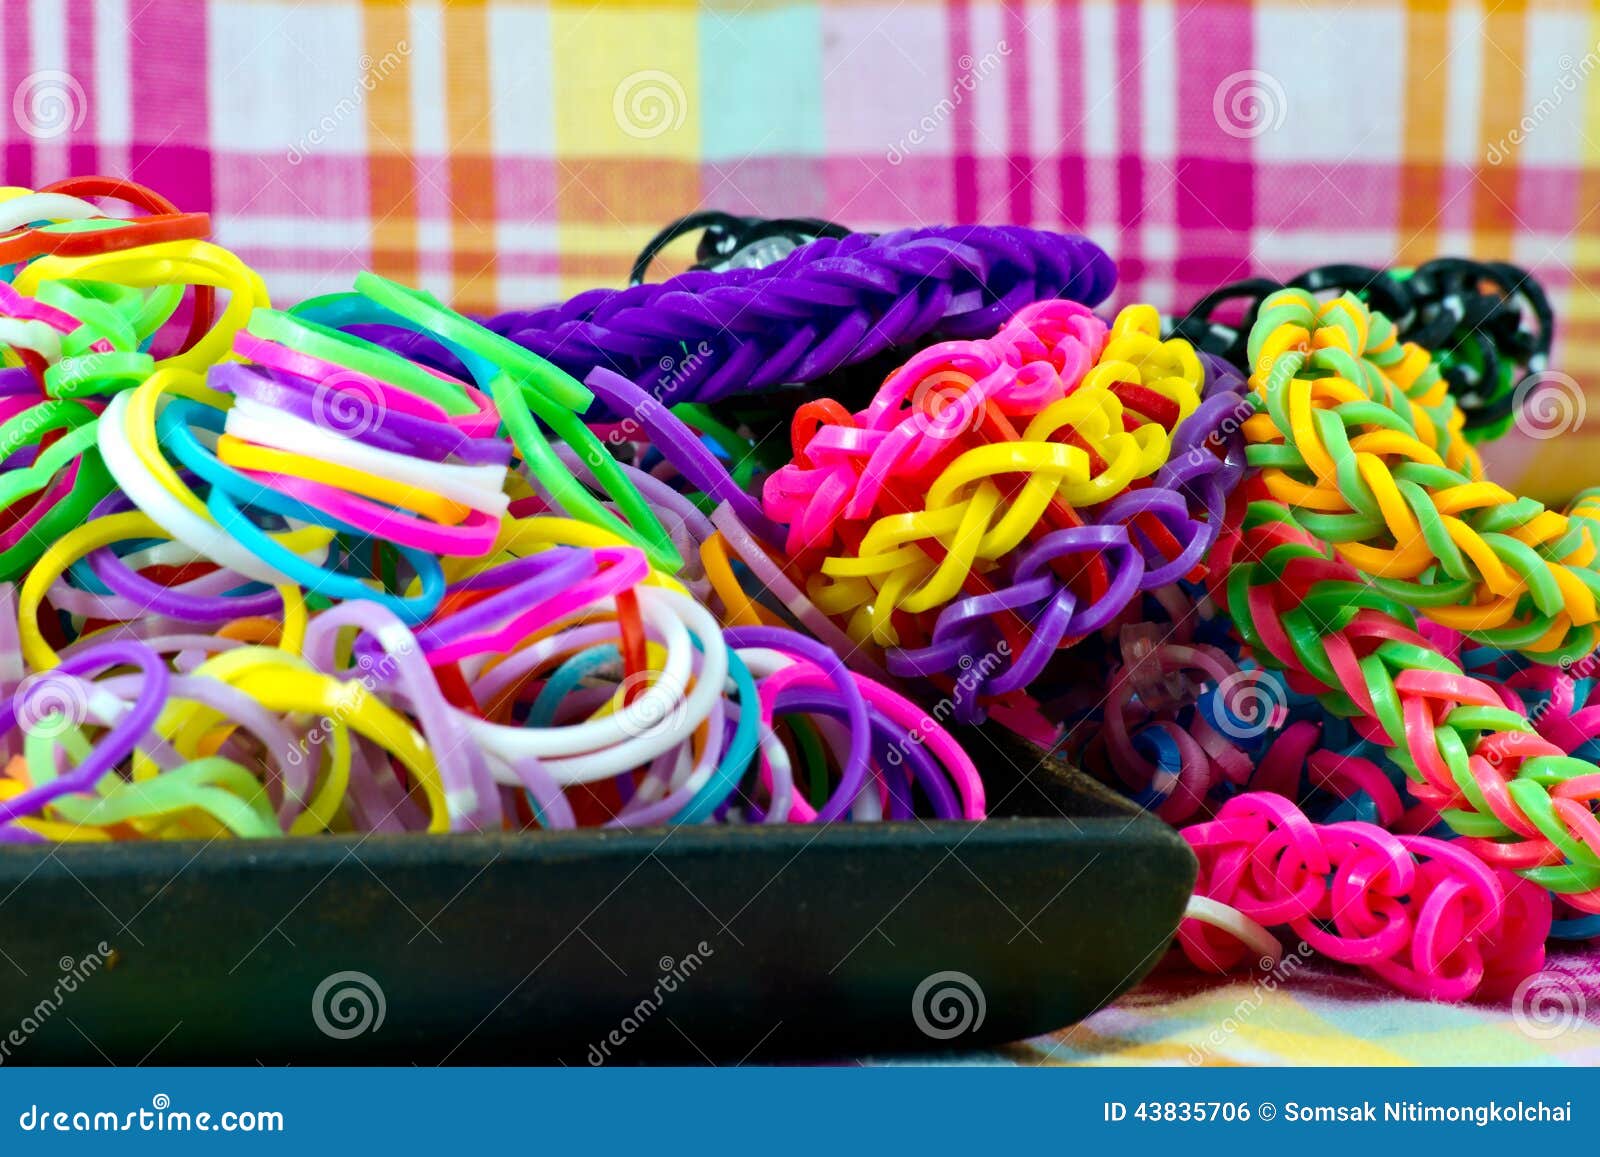 Colorful Rainbow Loom Bracelet Rubber Bands Fashion Stock Photo - Image of  band, banding: 43835706, Loom Bracelet Rubber Bands